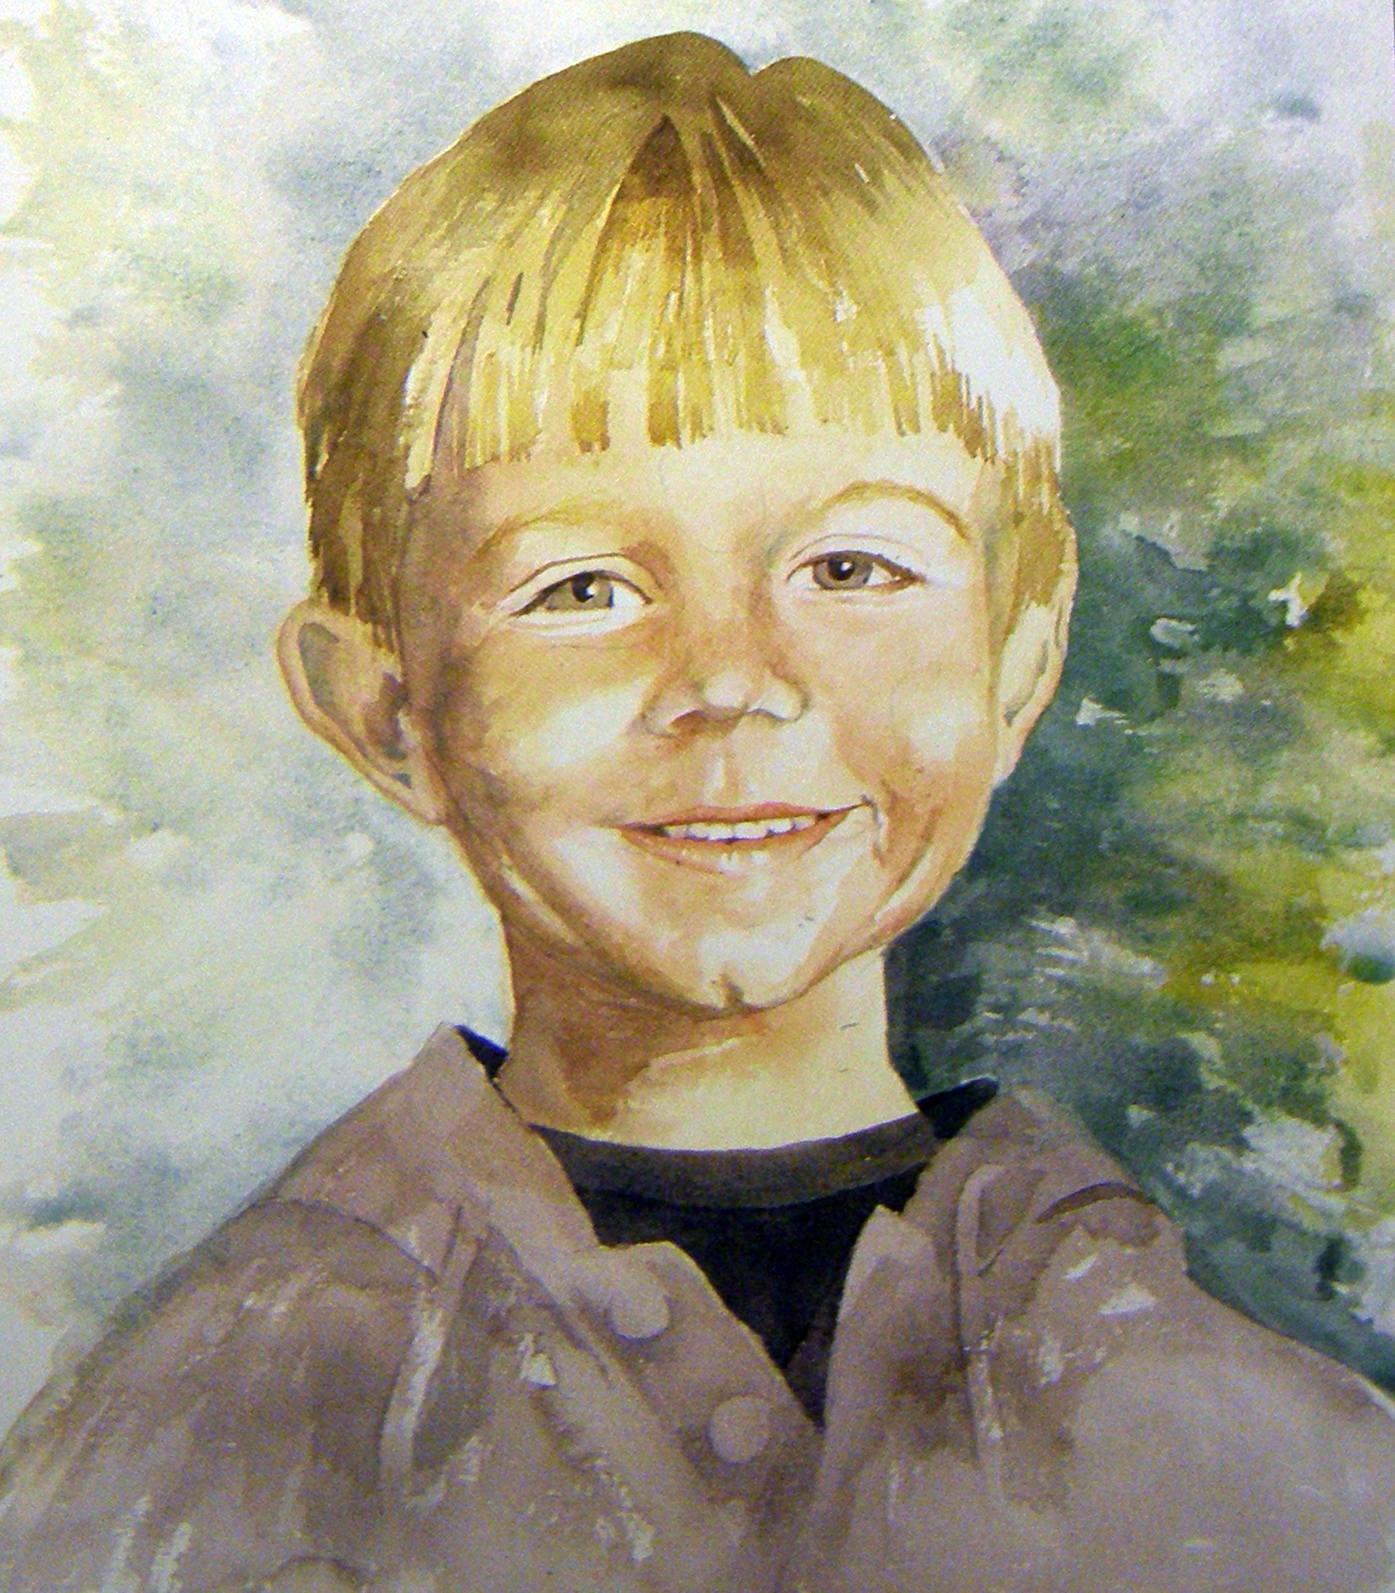 Портрет человека ребенку. Портрет мальчика. Портрет мальчика красками. Автопортрет для детей. Портрет мальчика карандашом.